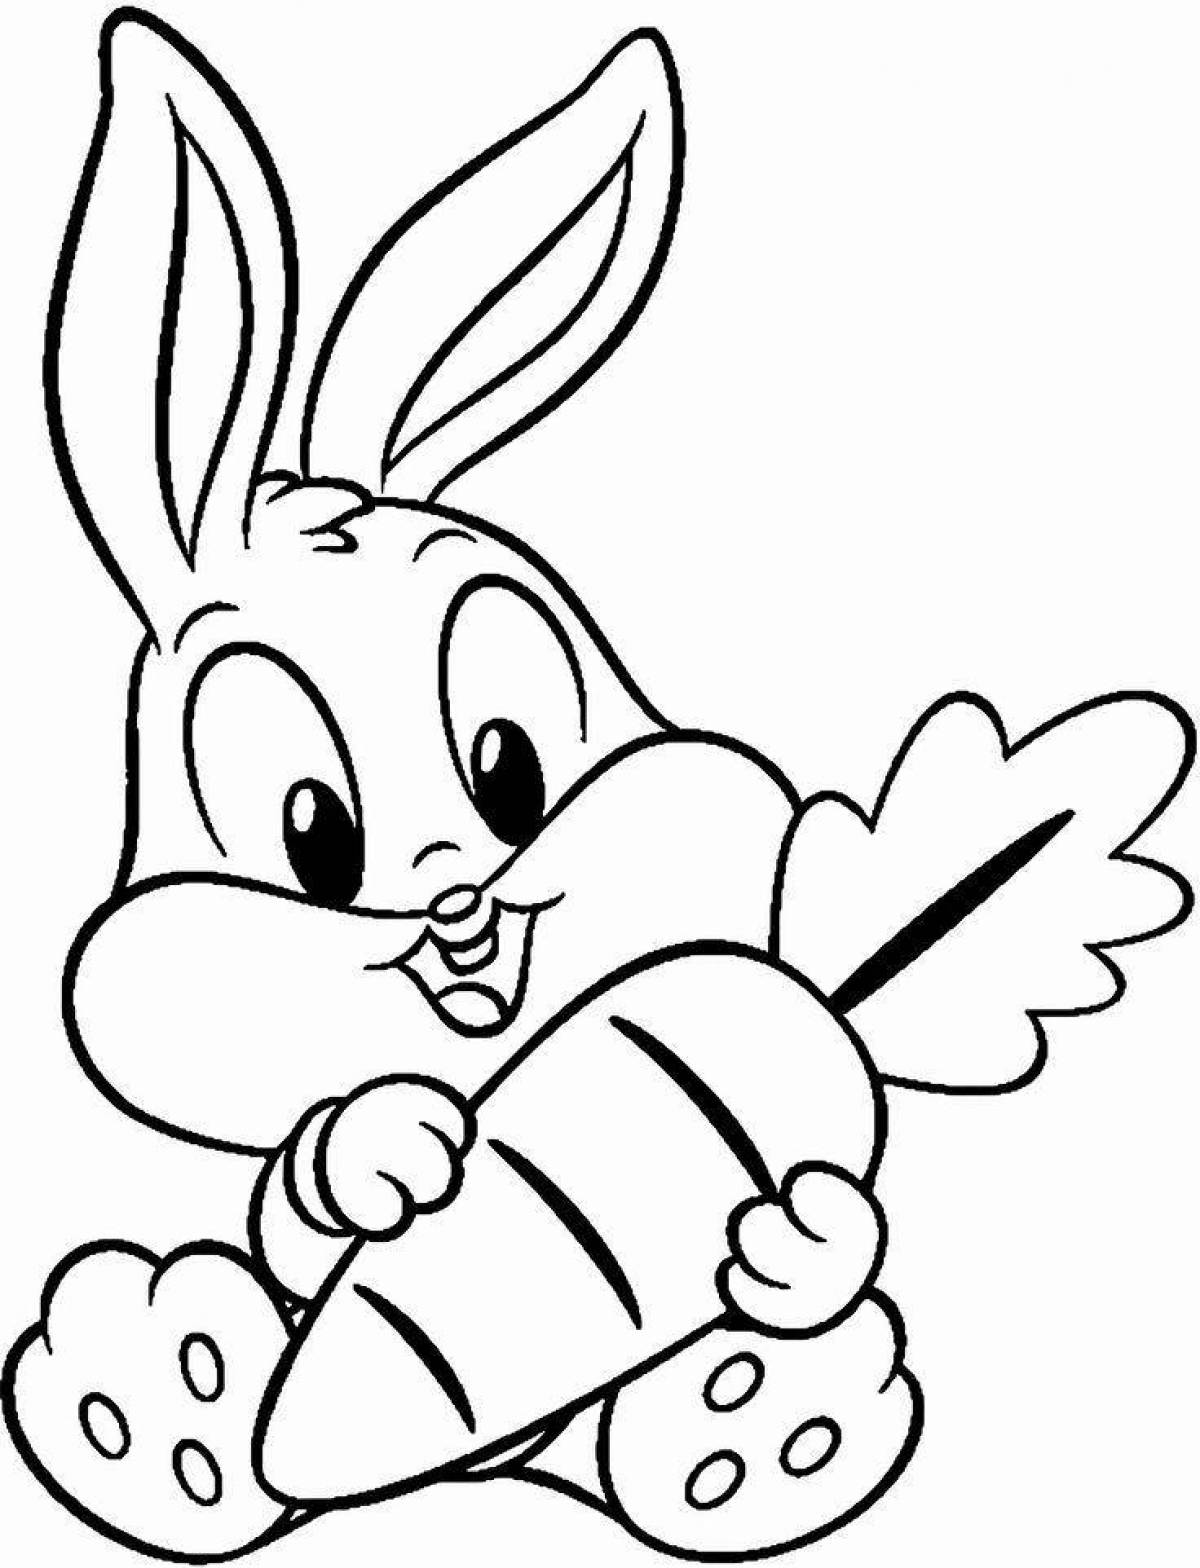 Joyful bunny coloring book for kids